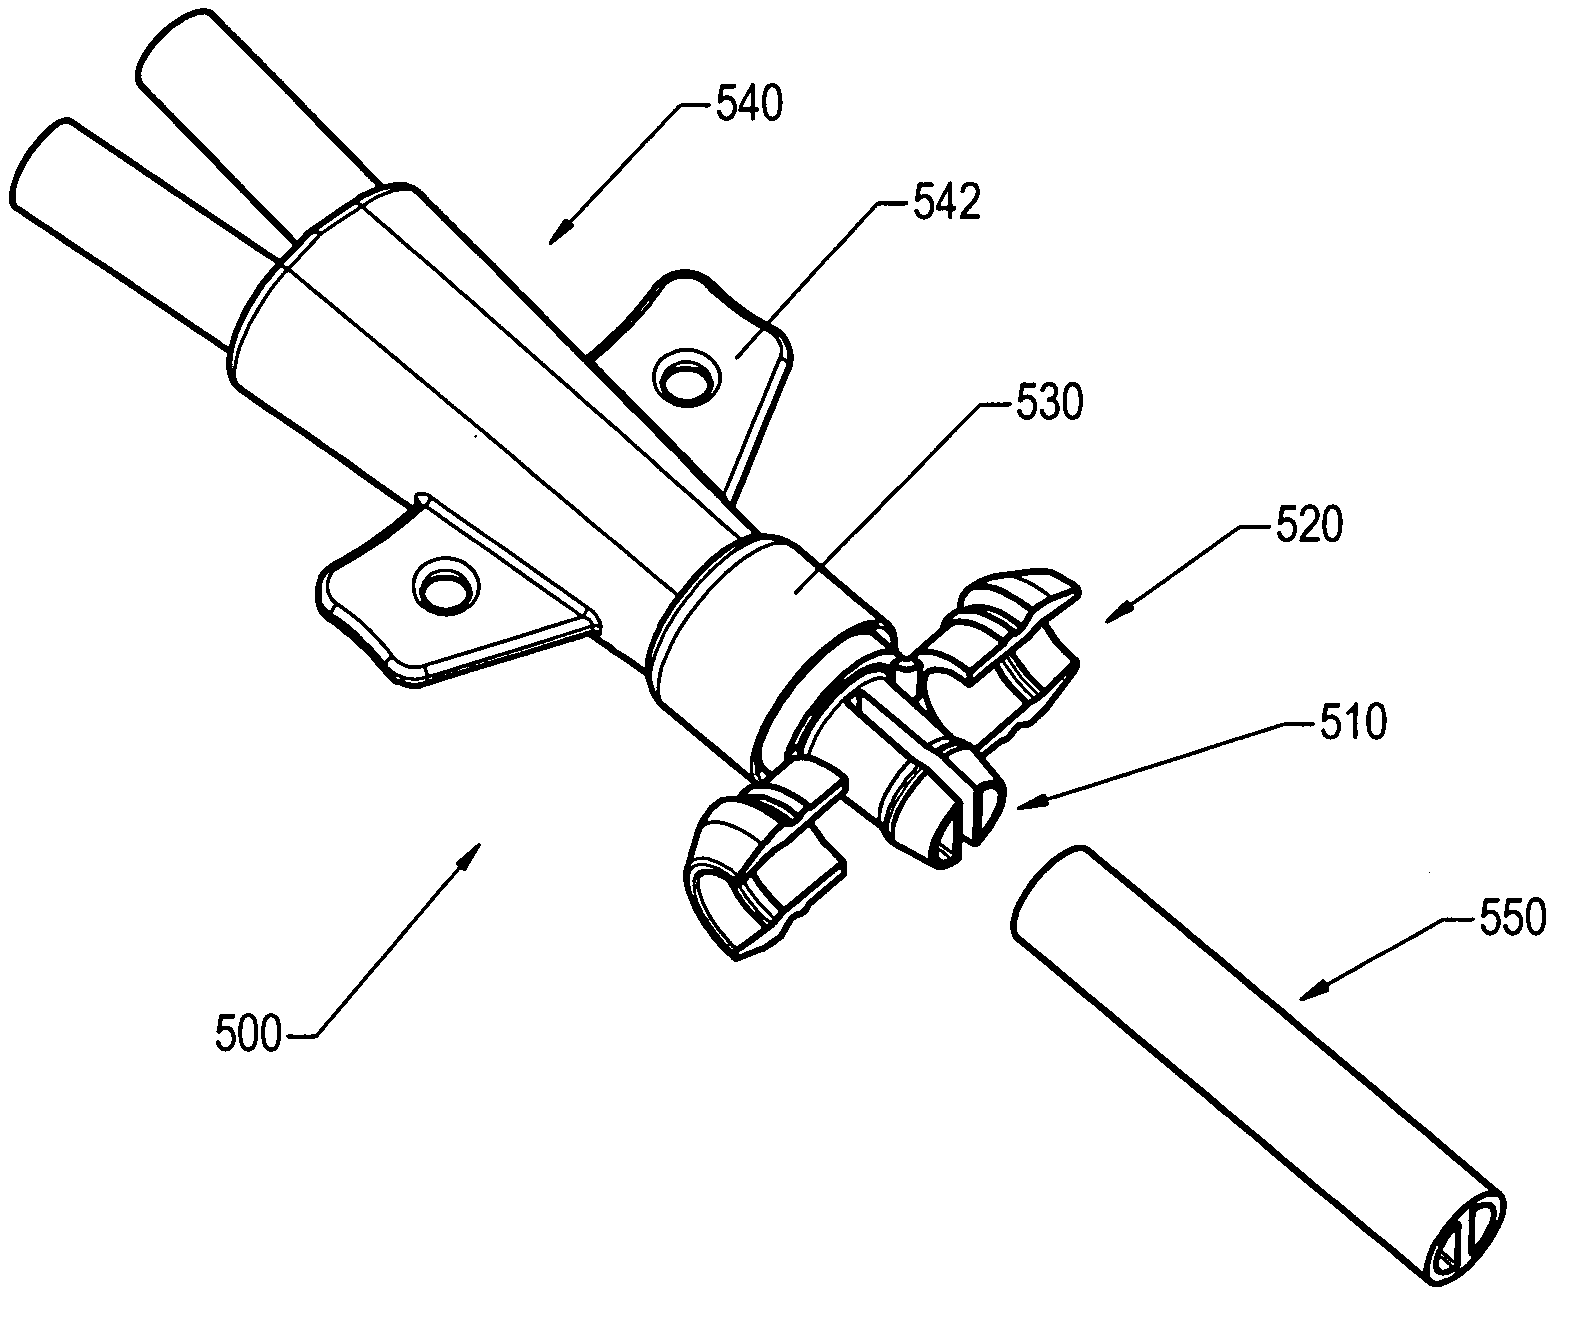 Catheter connector